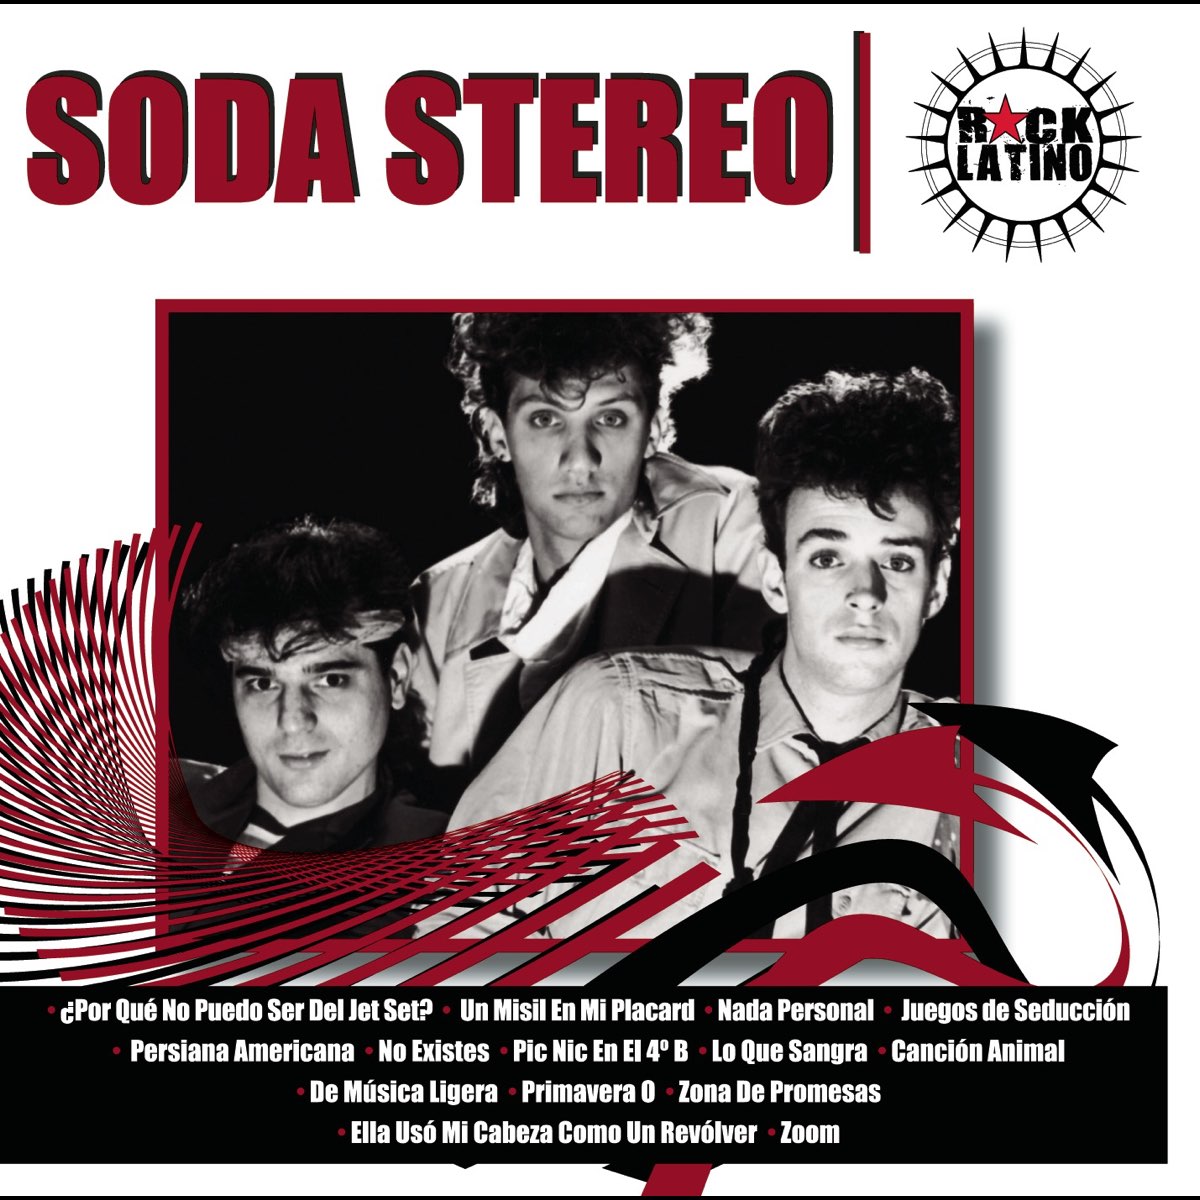 Rock Latino: Soda Stereo by Soda Stereo on Apple Music